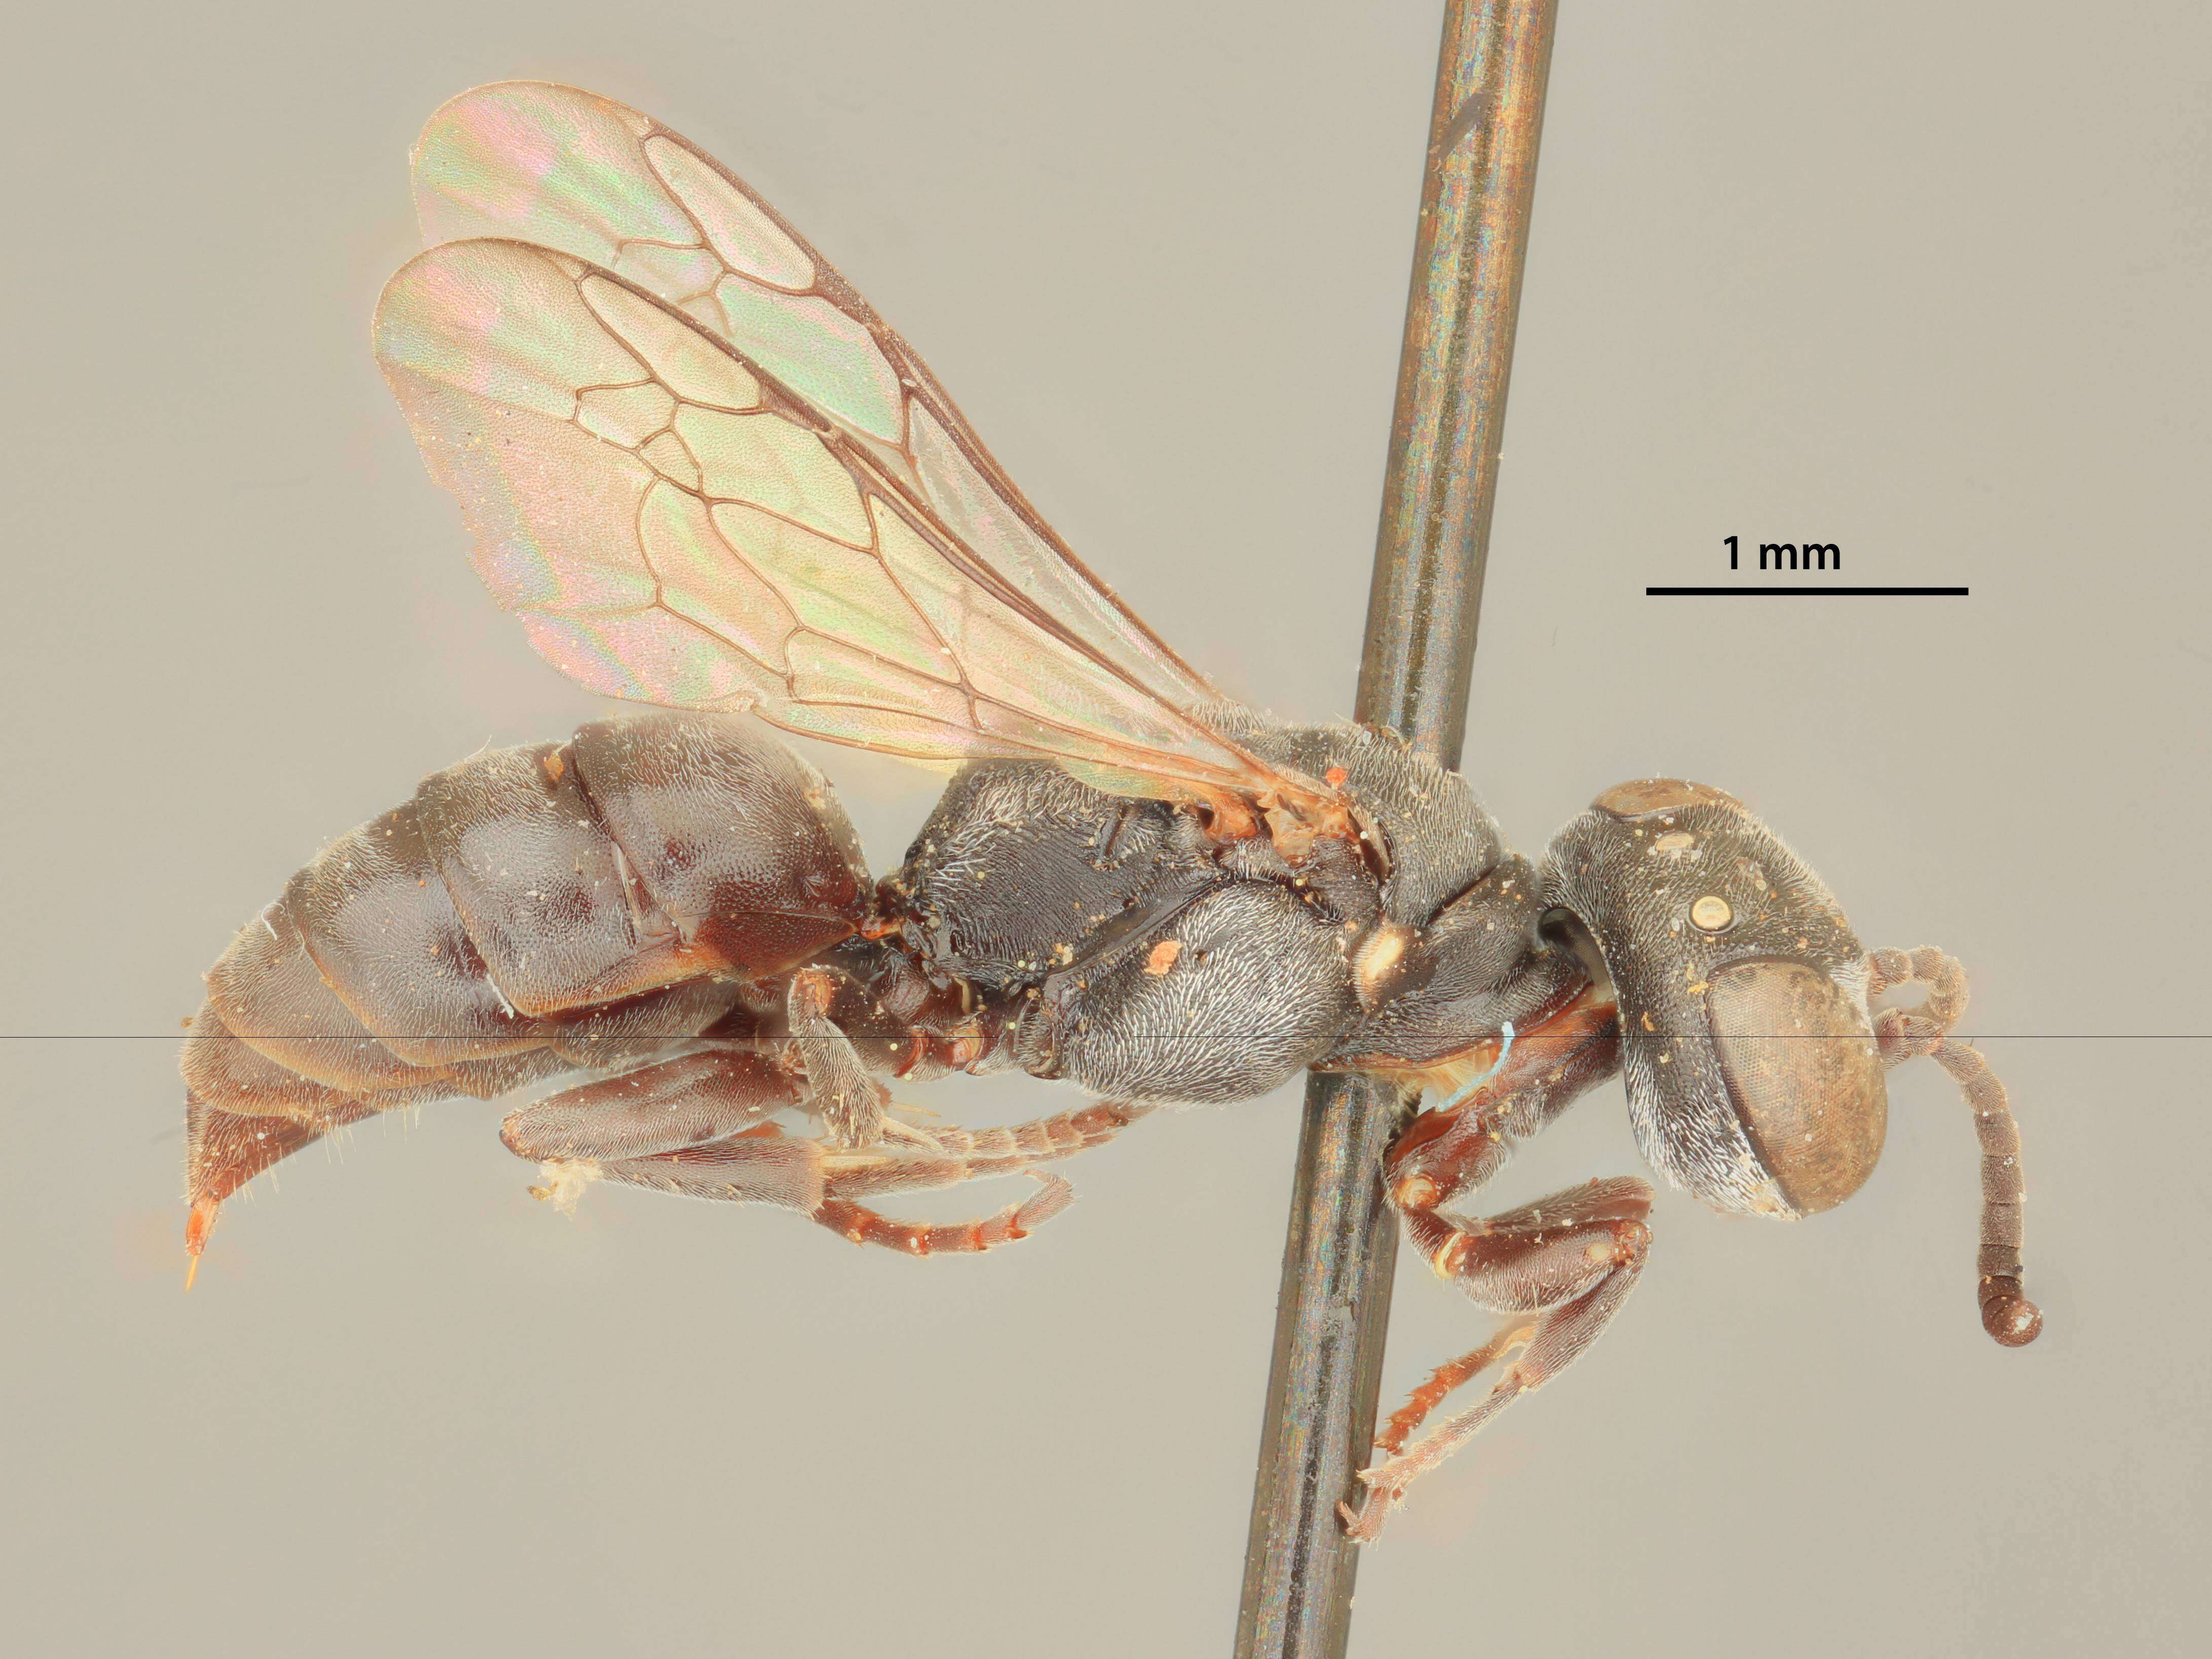 Image of Crabronid wasp